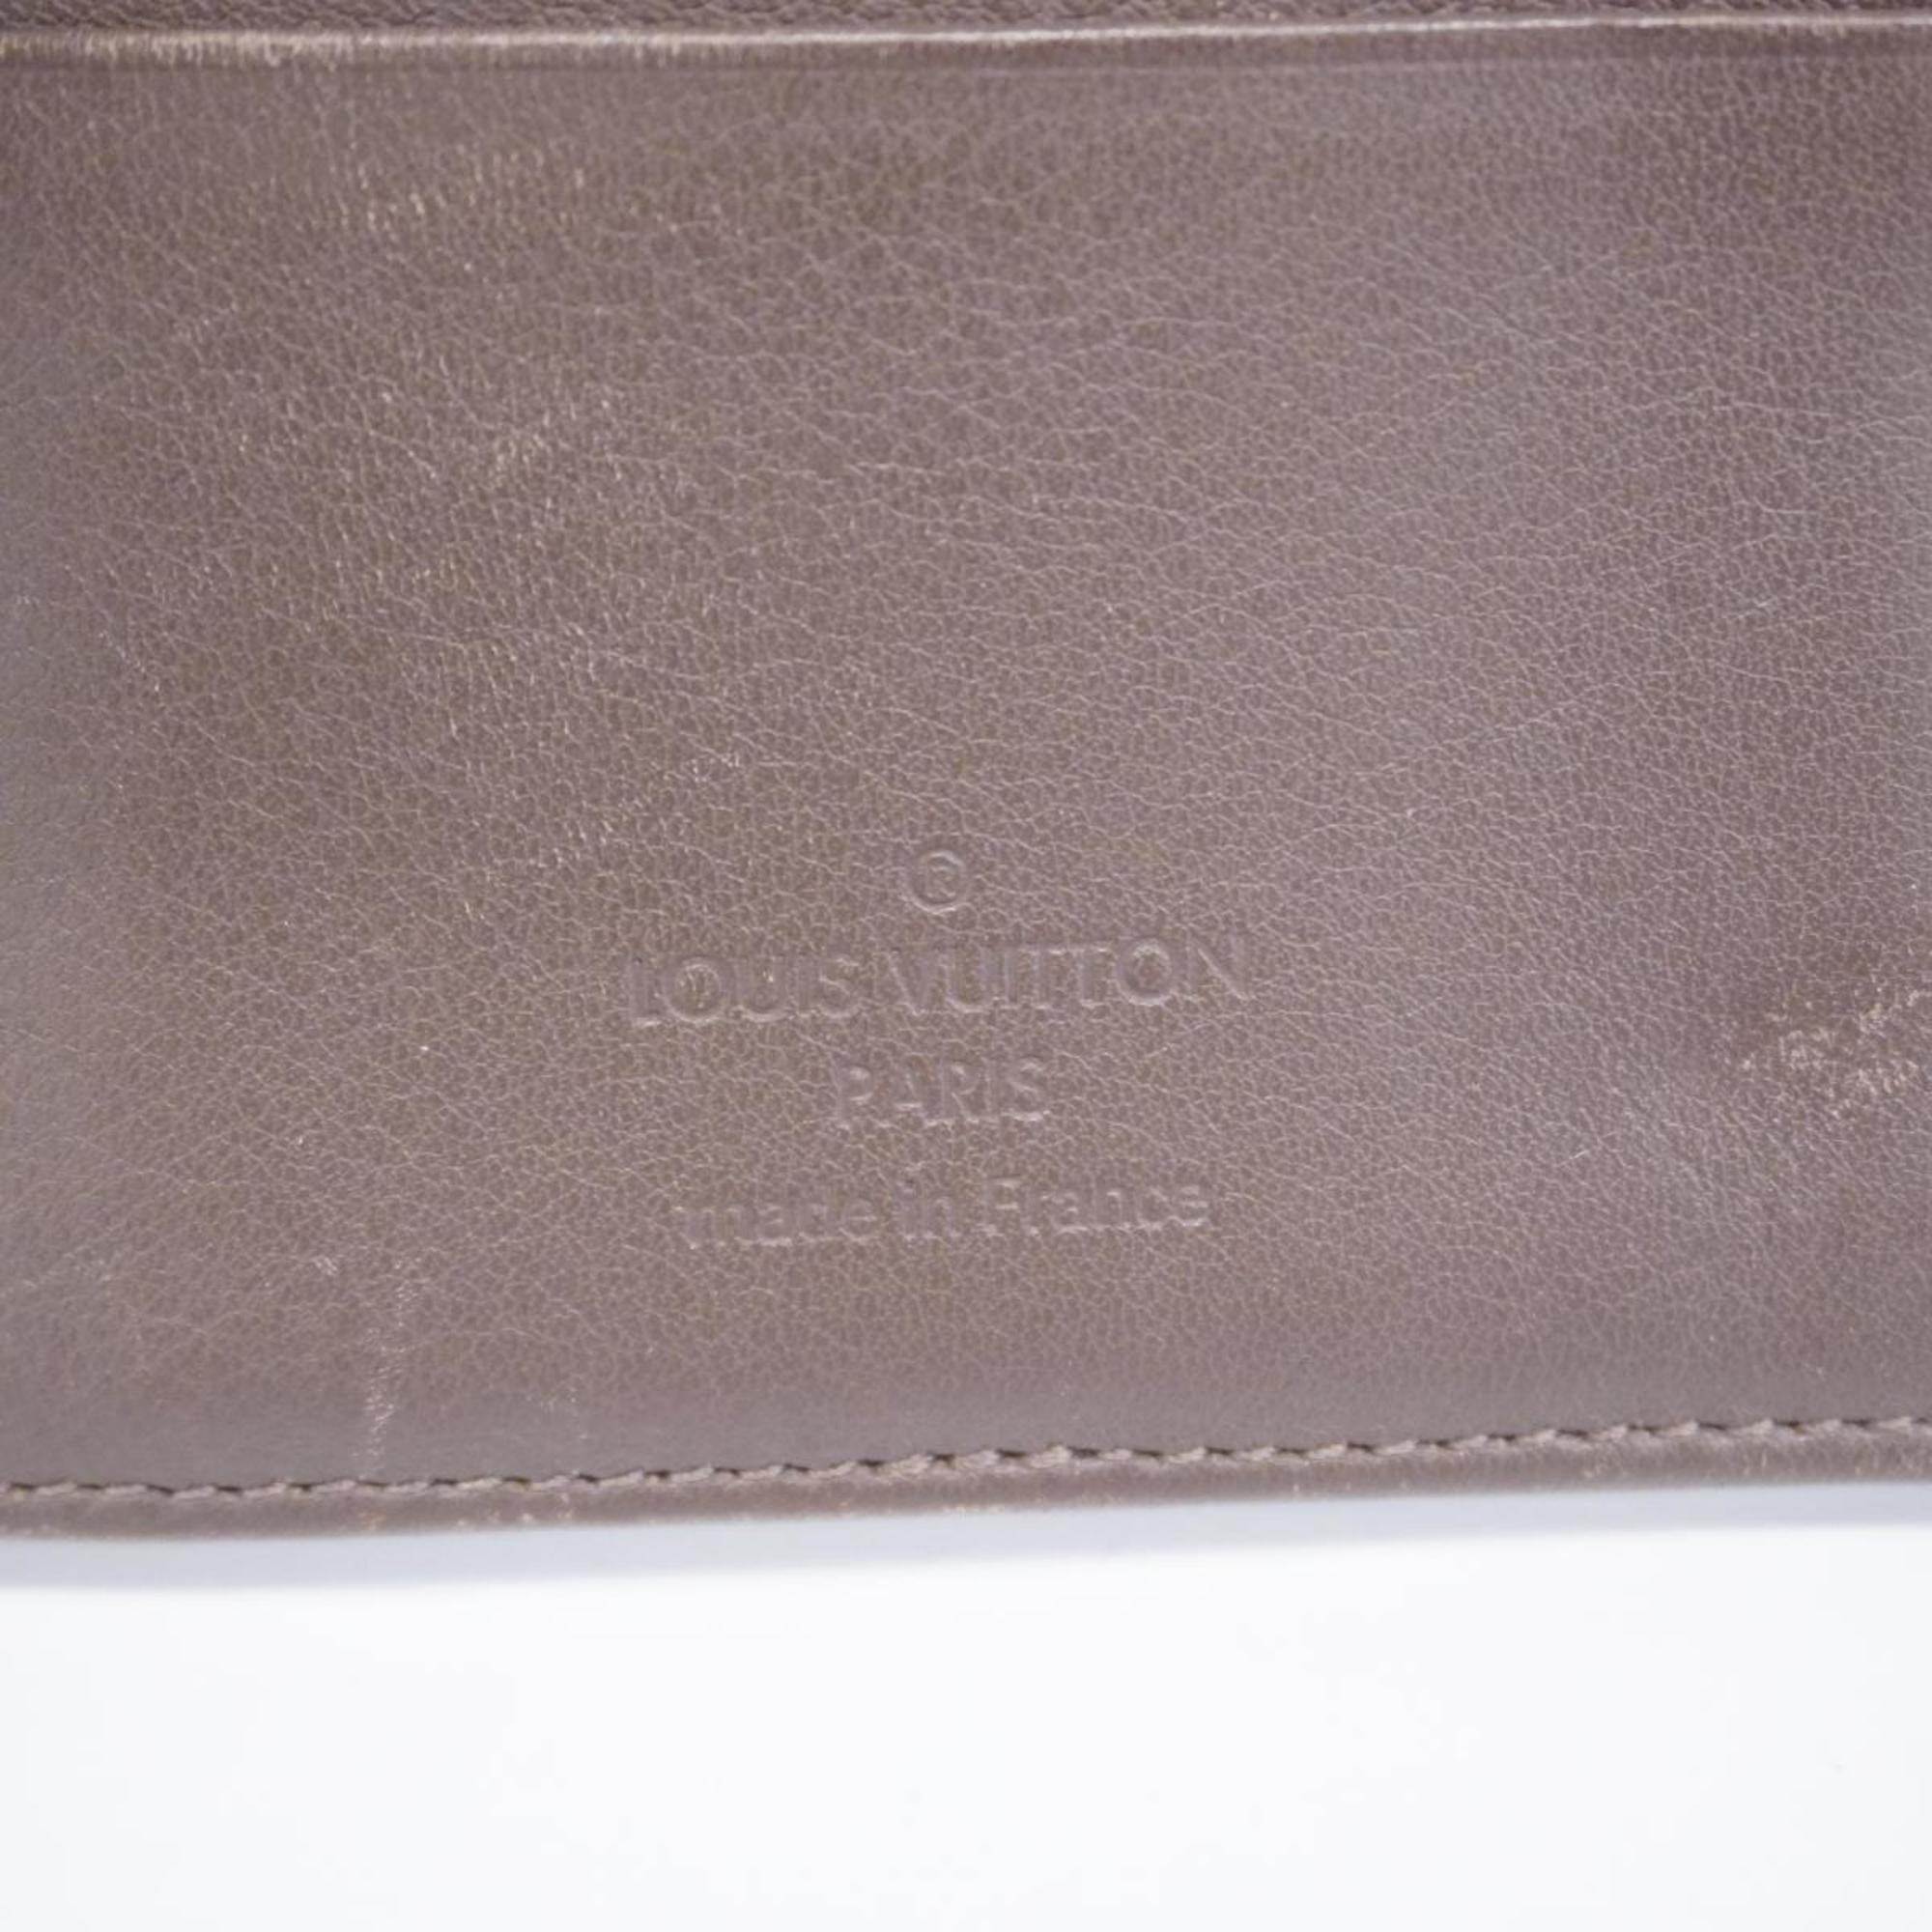 Louis Vuitton Tri-fold Long Wallet Mahina Portefeuille Amelia M58125 Acajou Men's Women's